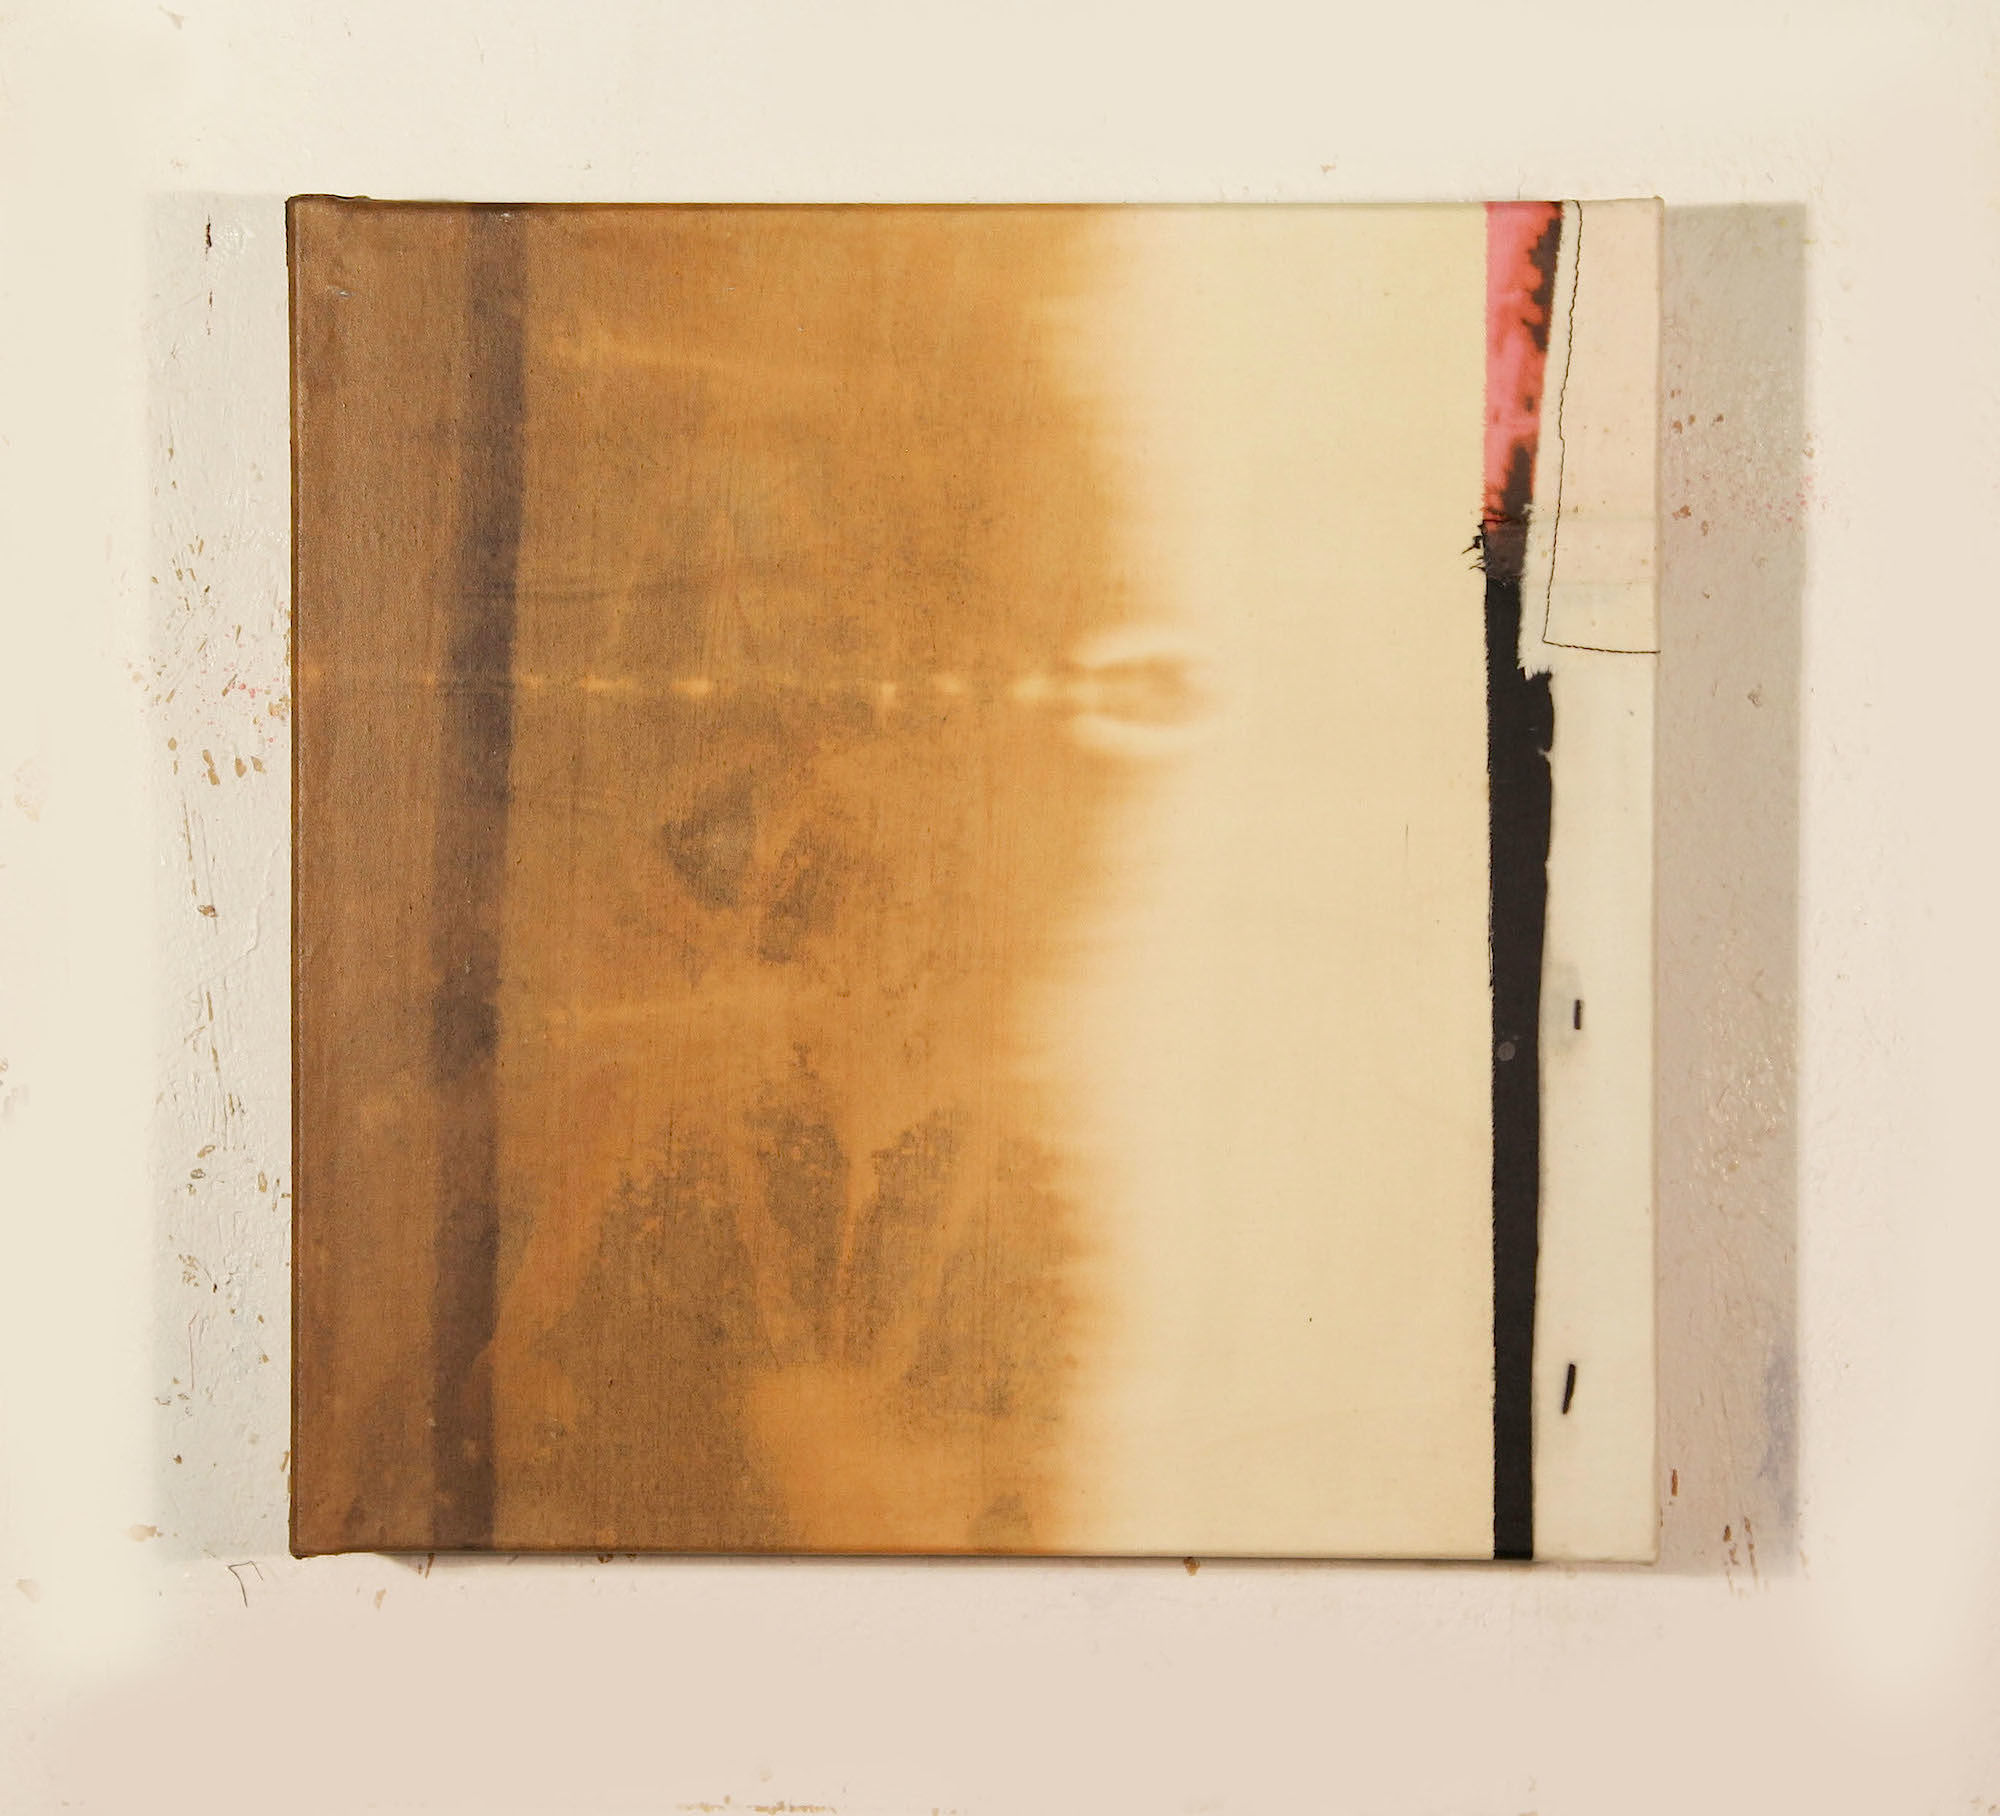 Guangyun Liu, Original Colour, 2017, 60 x 60 x 10 cm